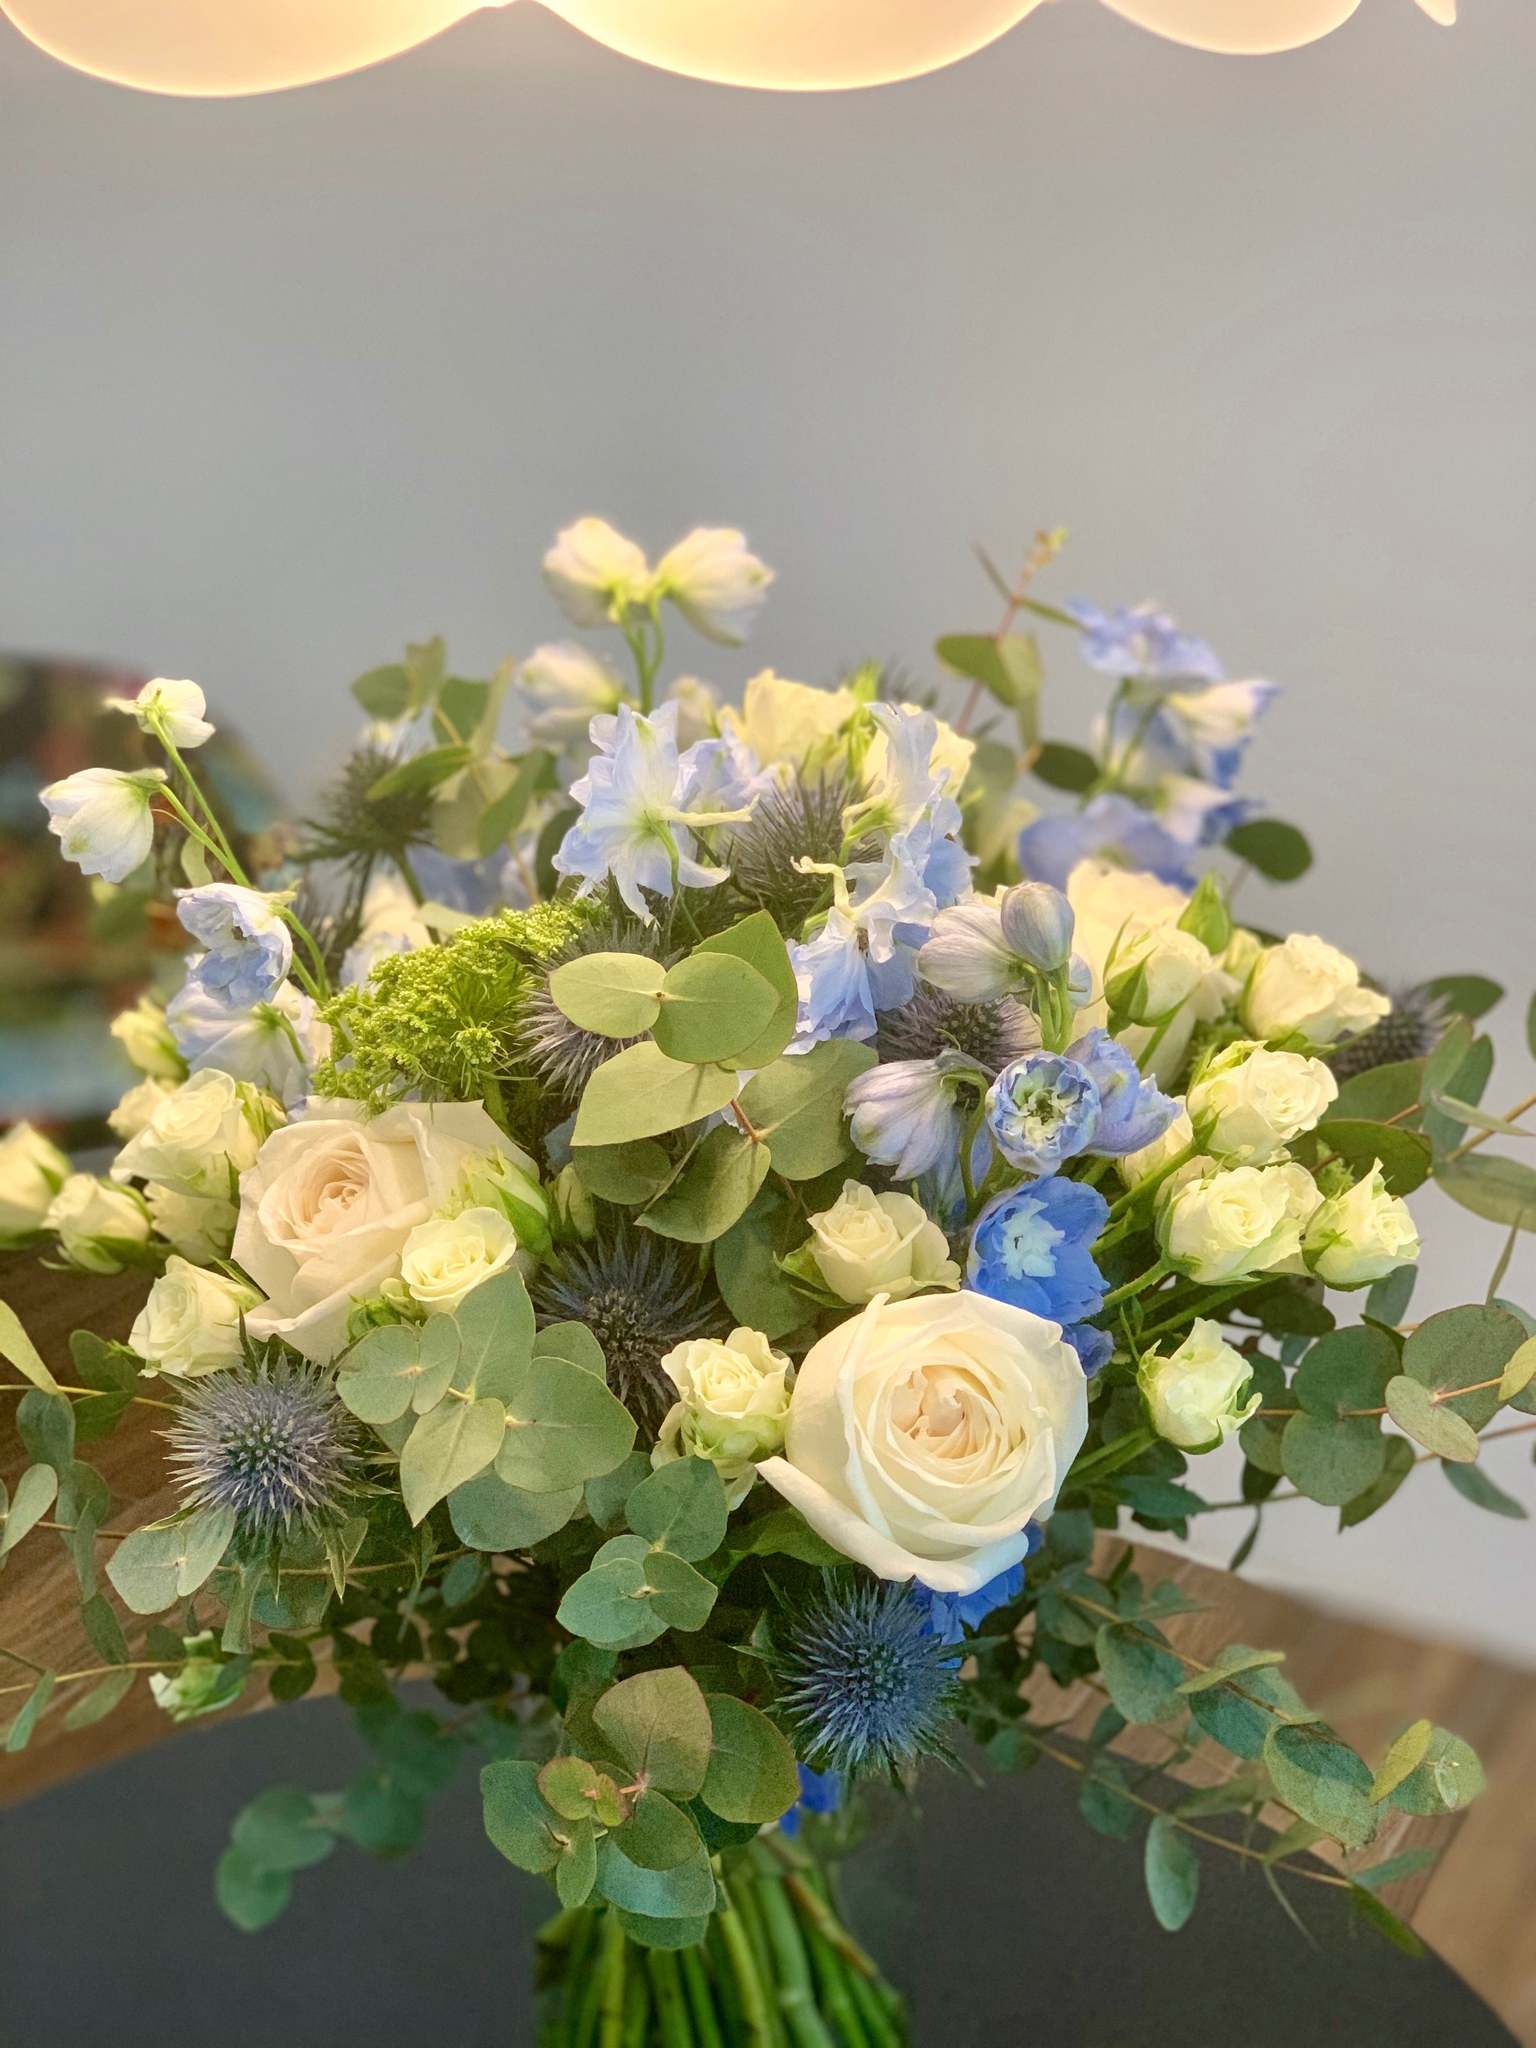 Josephine bouquet by Margot Floral Design. A fresh flower bouquet composed of White O'Hara Garden Roses, Blue Delphinium, Eryngium, and Eucalyptus. Medium size.